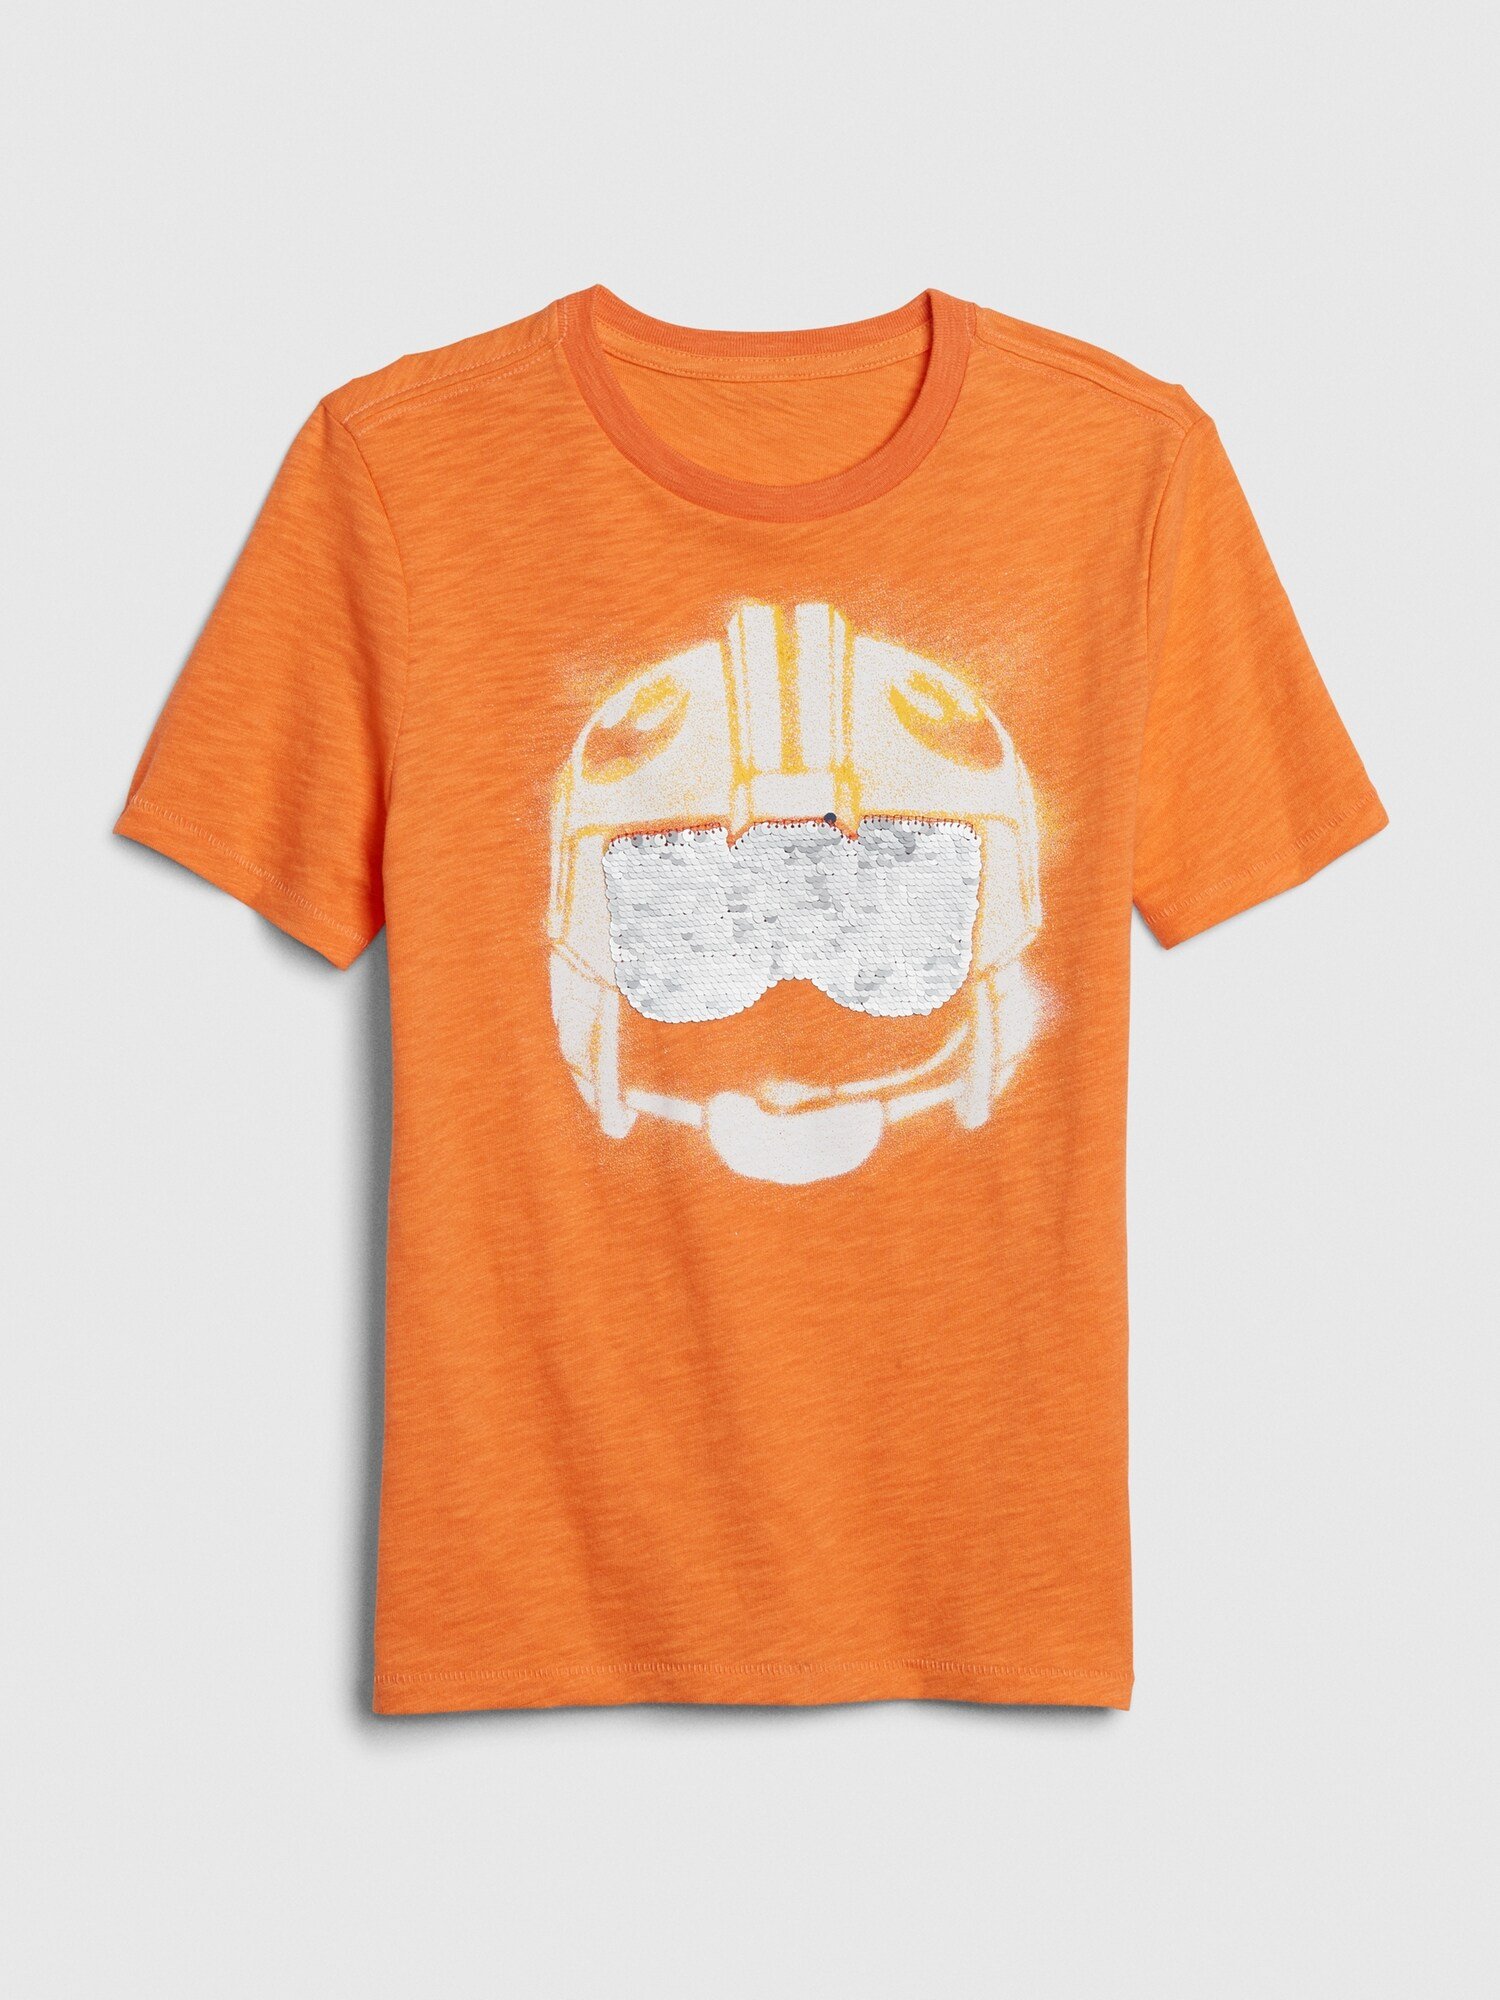 Star Wars™ Pullu T-Shirt product image